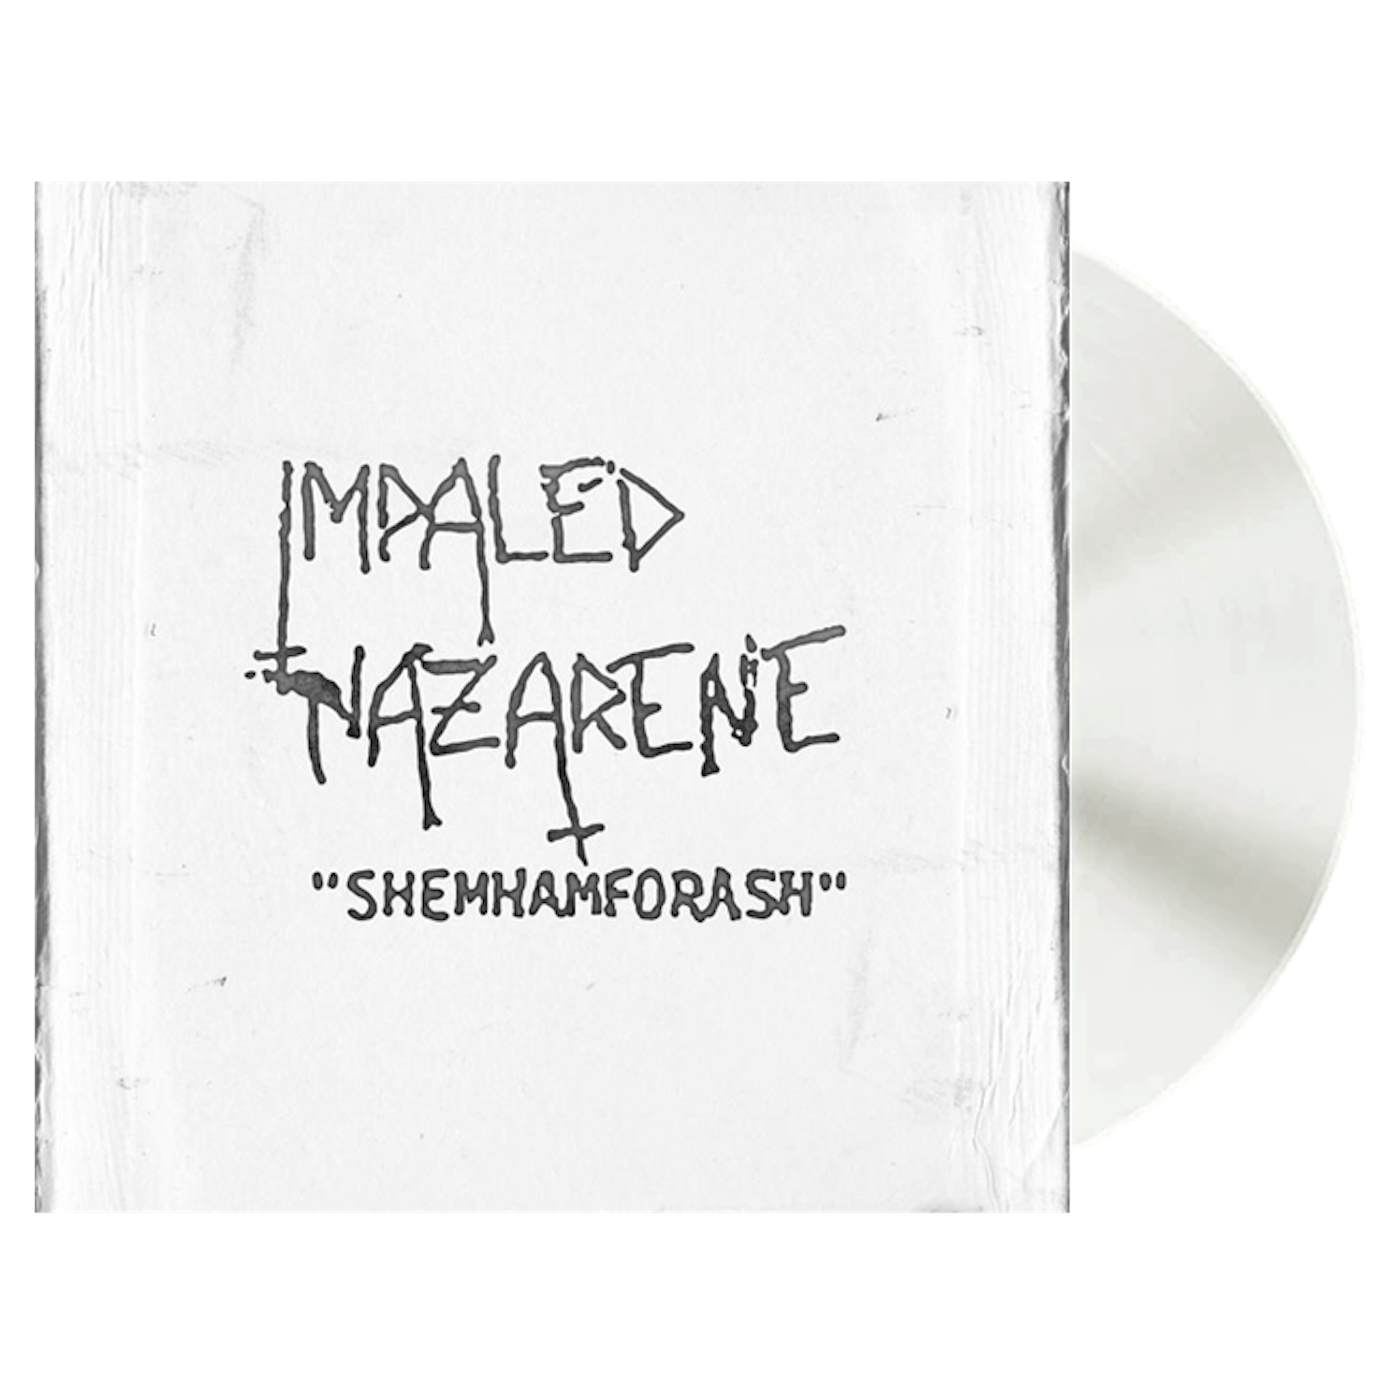 IMPALED NAZARENE - 'Shemhamforash' 10” (White) (Vinyl)